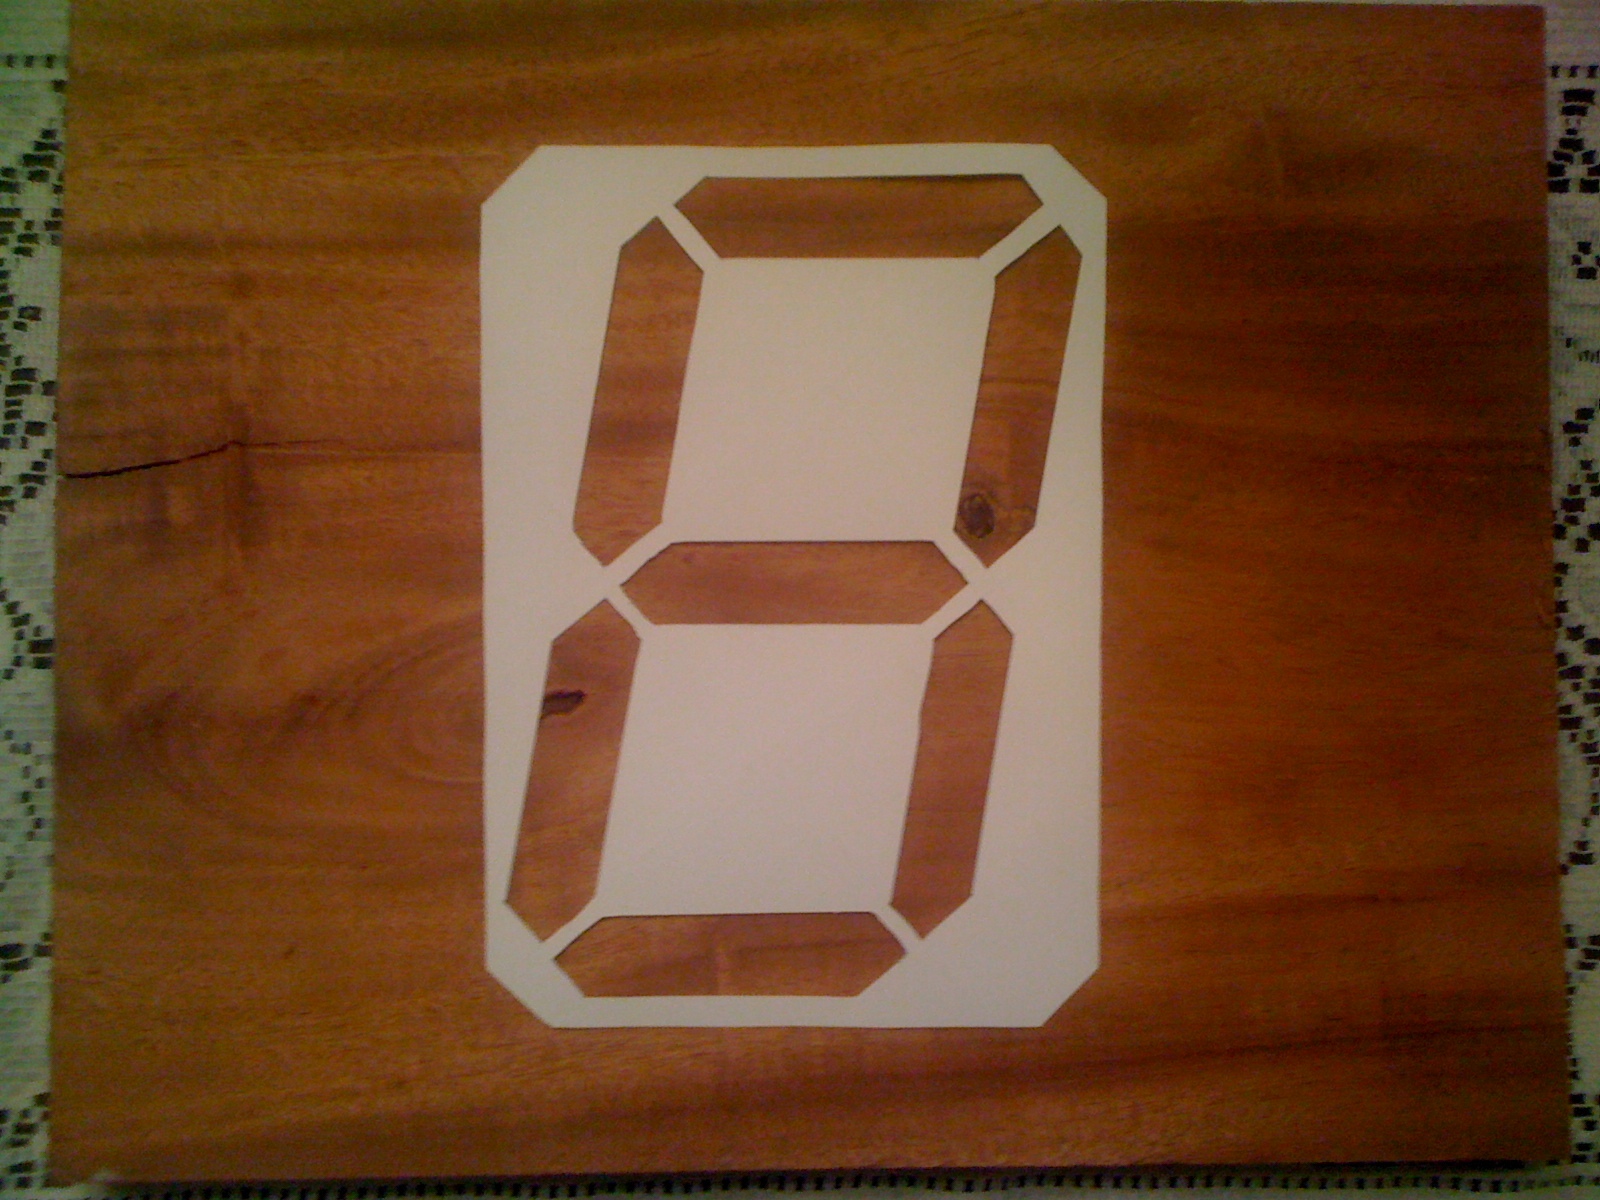 4-Foot Wooden Digital Clock